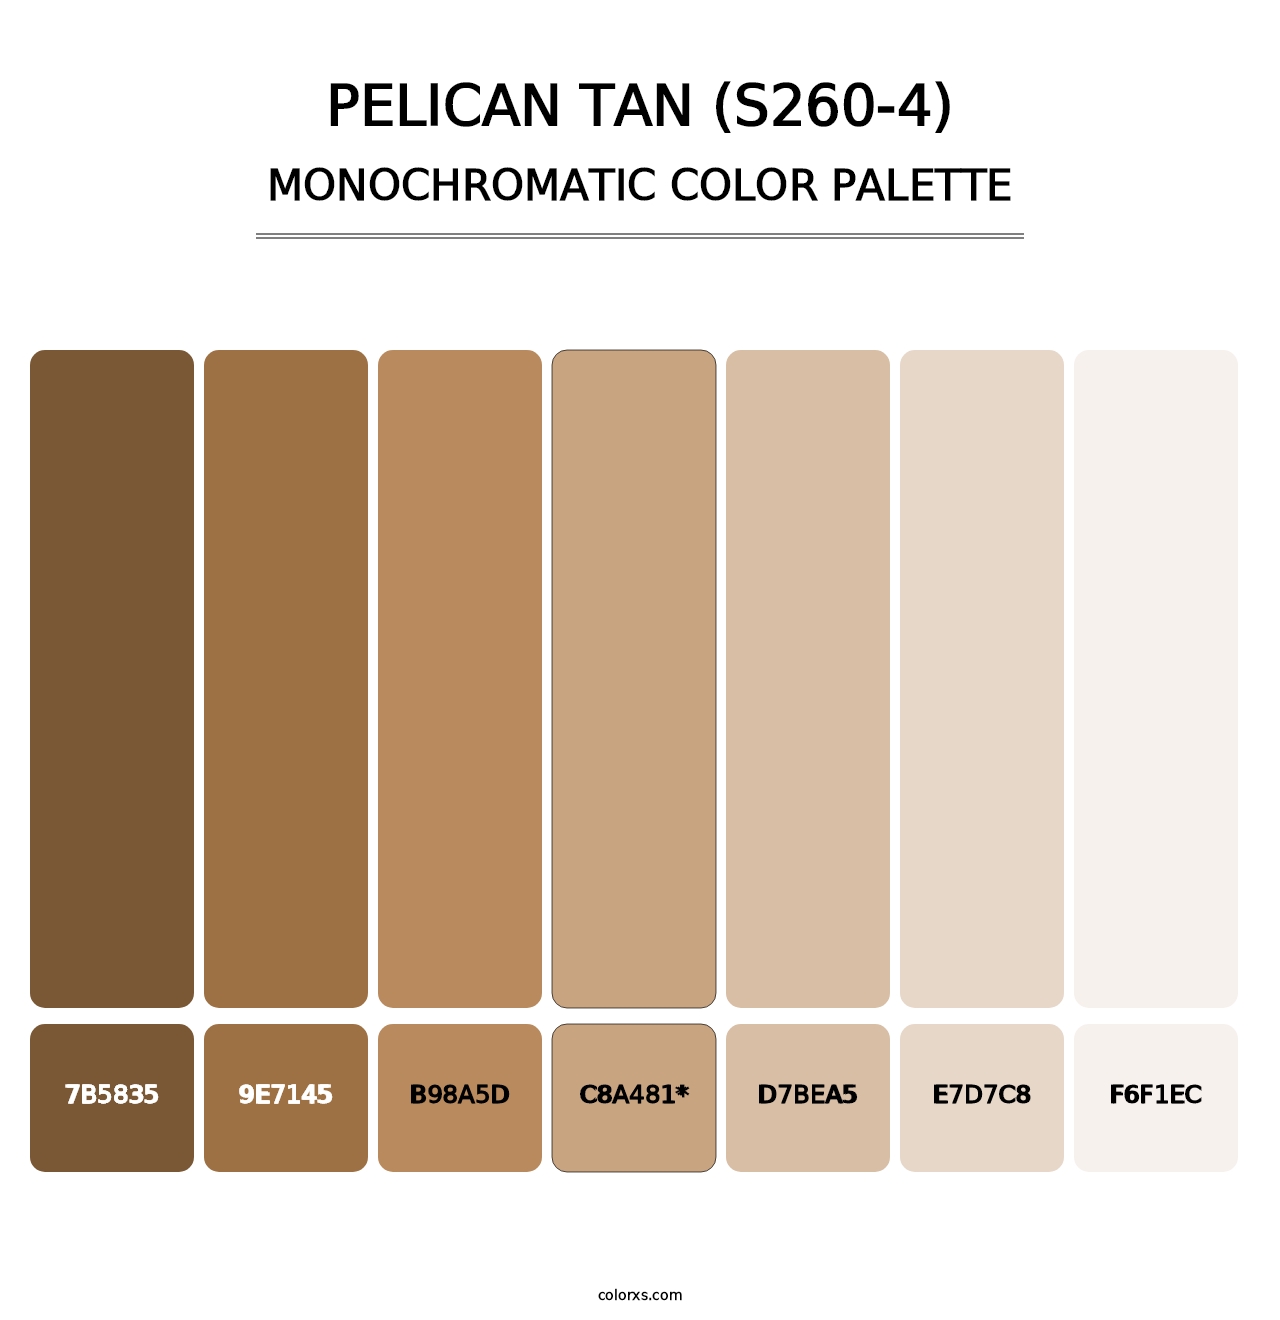 Pelican Tan (S260-4) - Monochromatic Color Palette